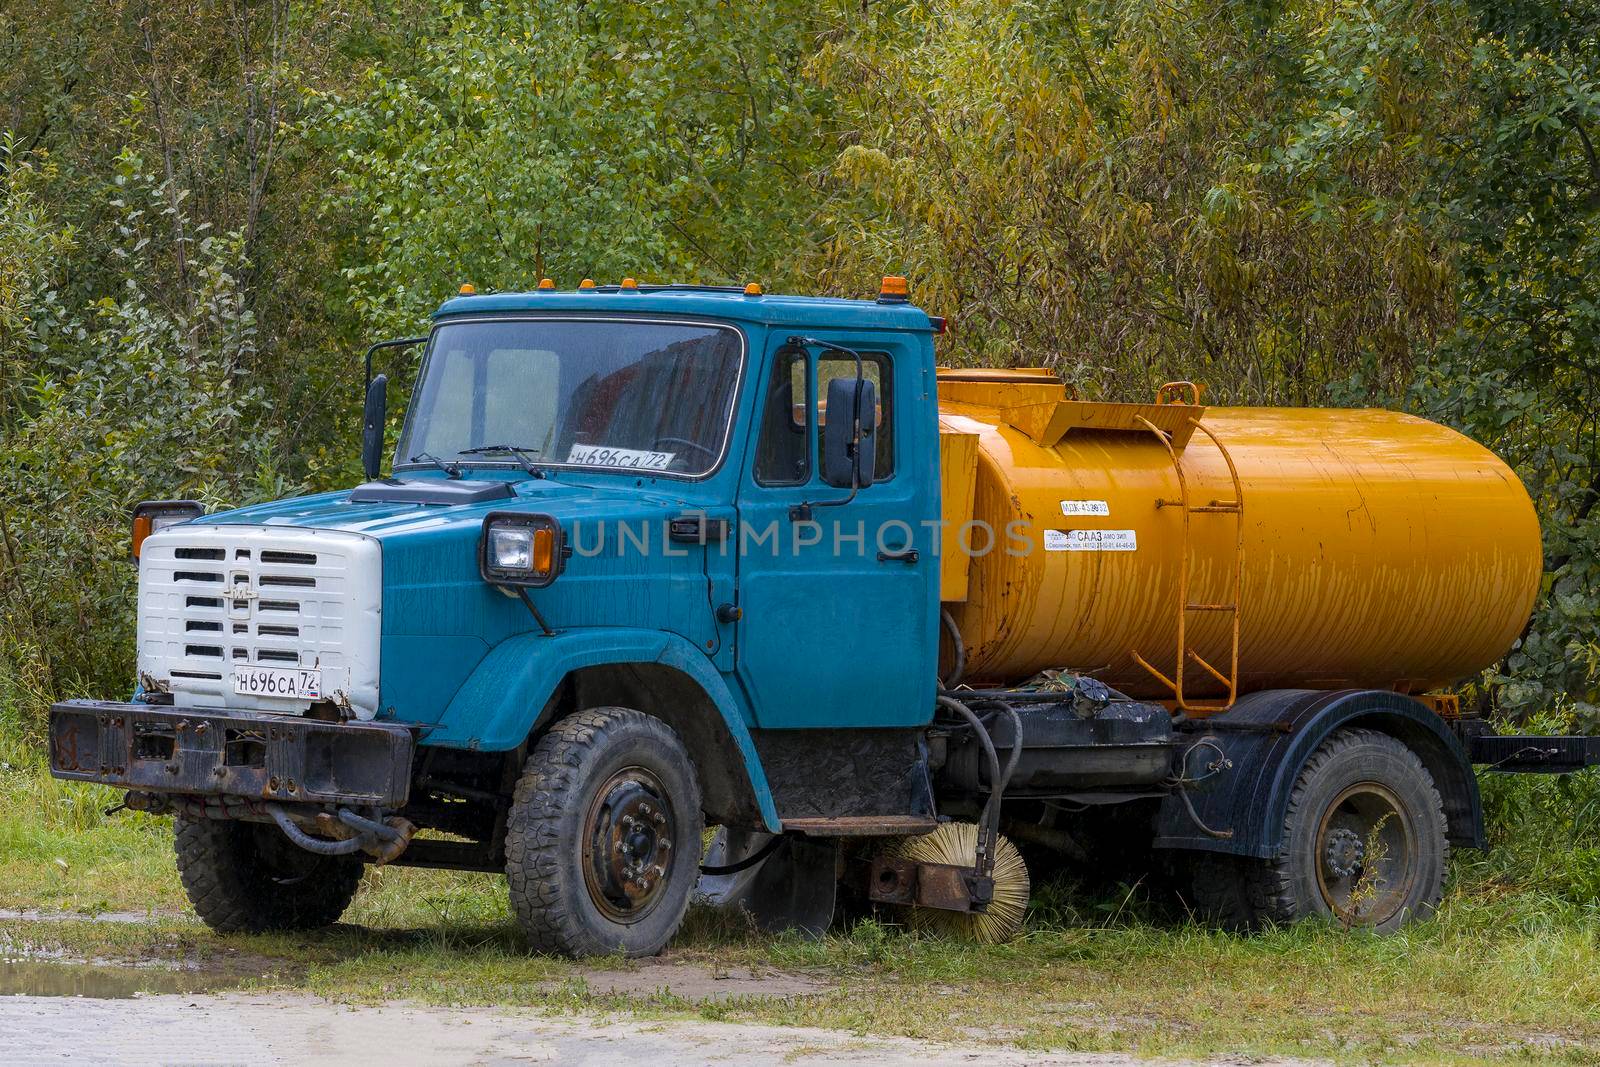 Utilities city car Machine, Bashkortostan, Russia - 19 June, 2022. by Essffes